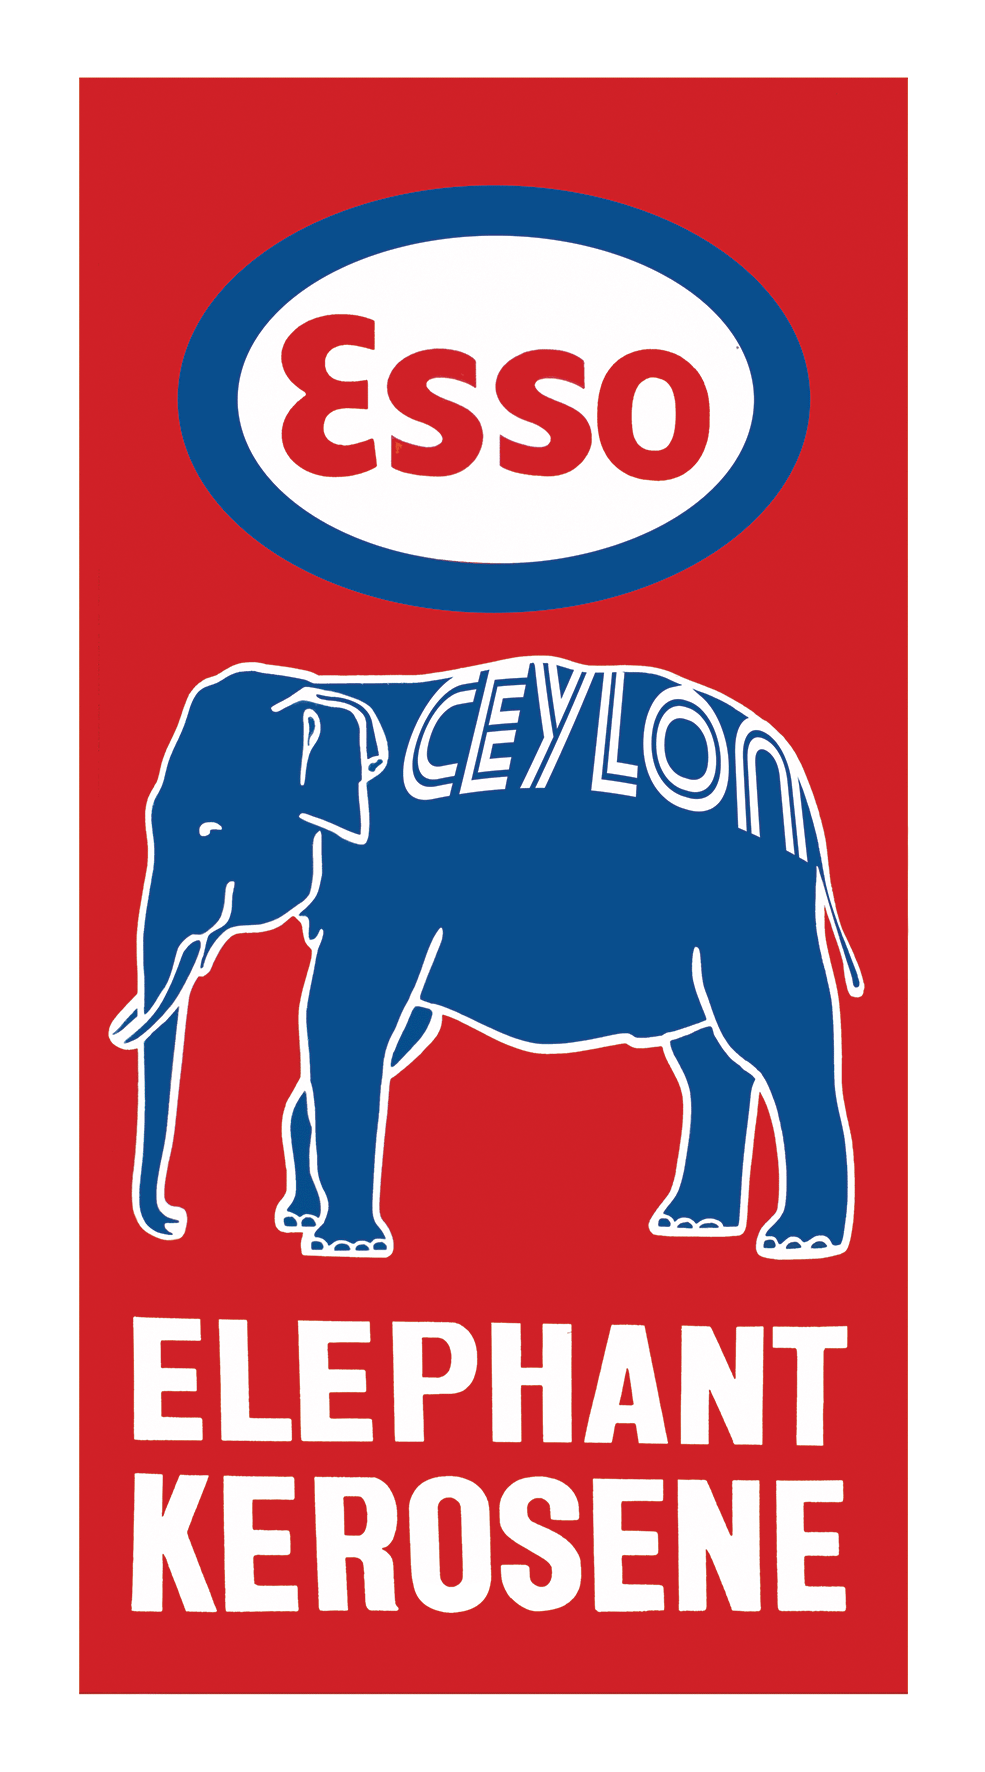 Esso Elephant Kerosene, 1940s.